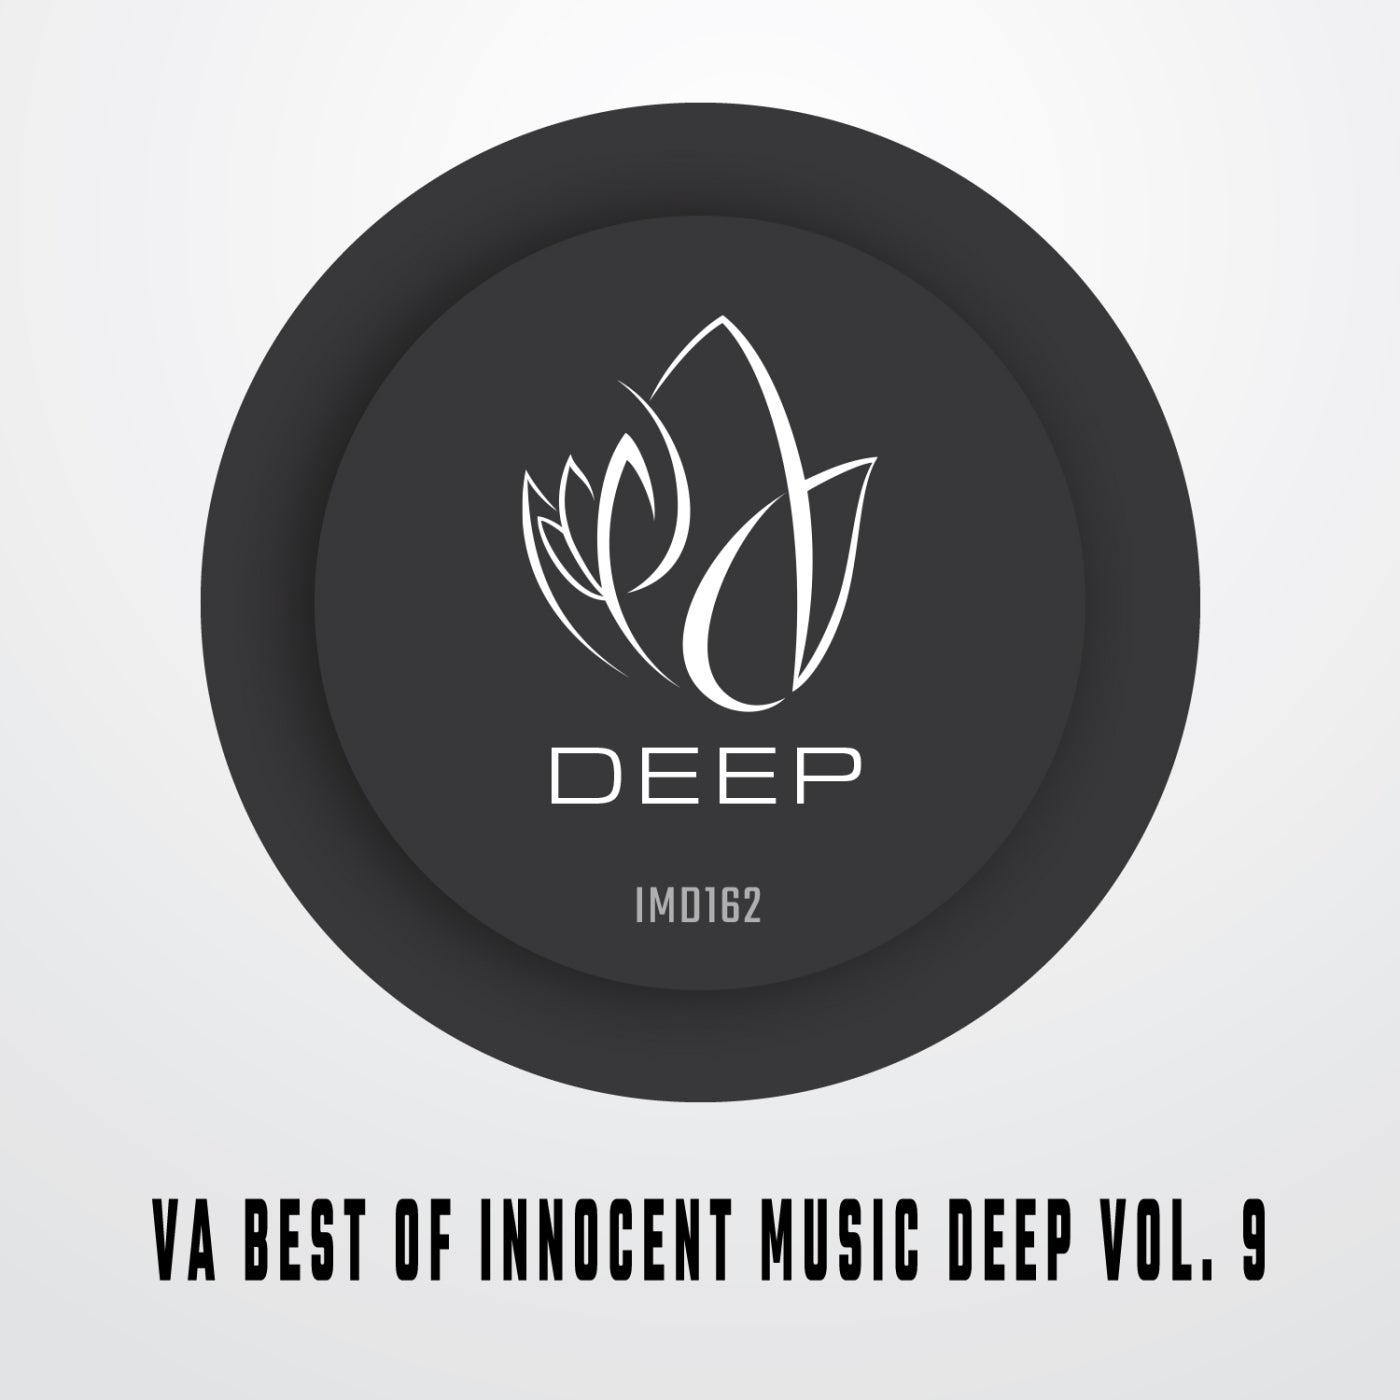 VA Best Of Innocent Music Deep, Vol. 9